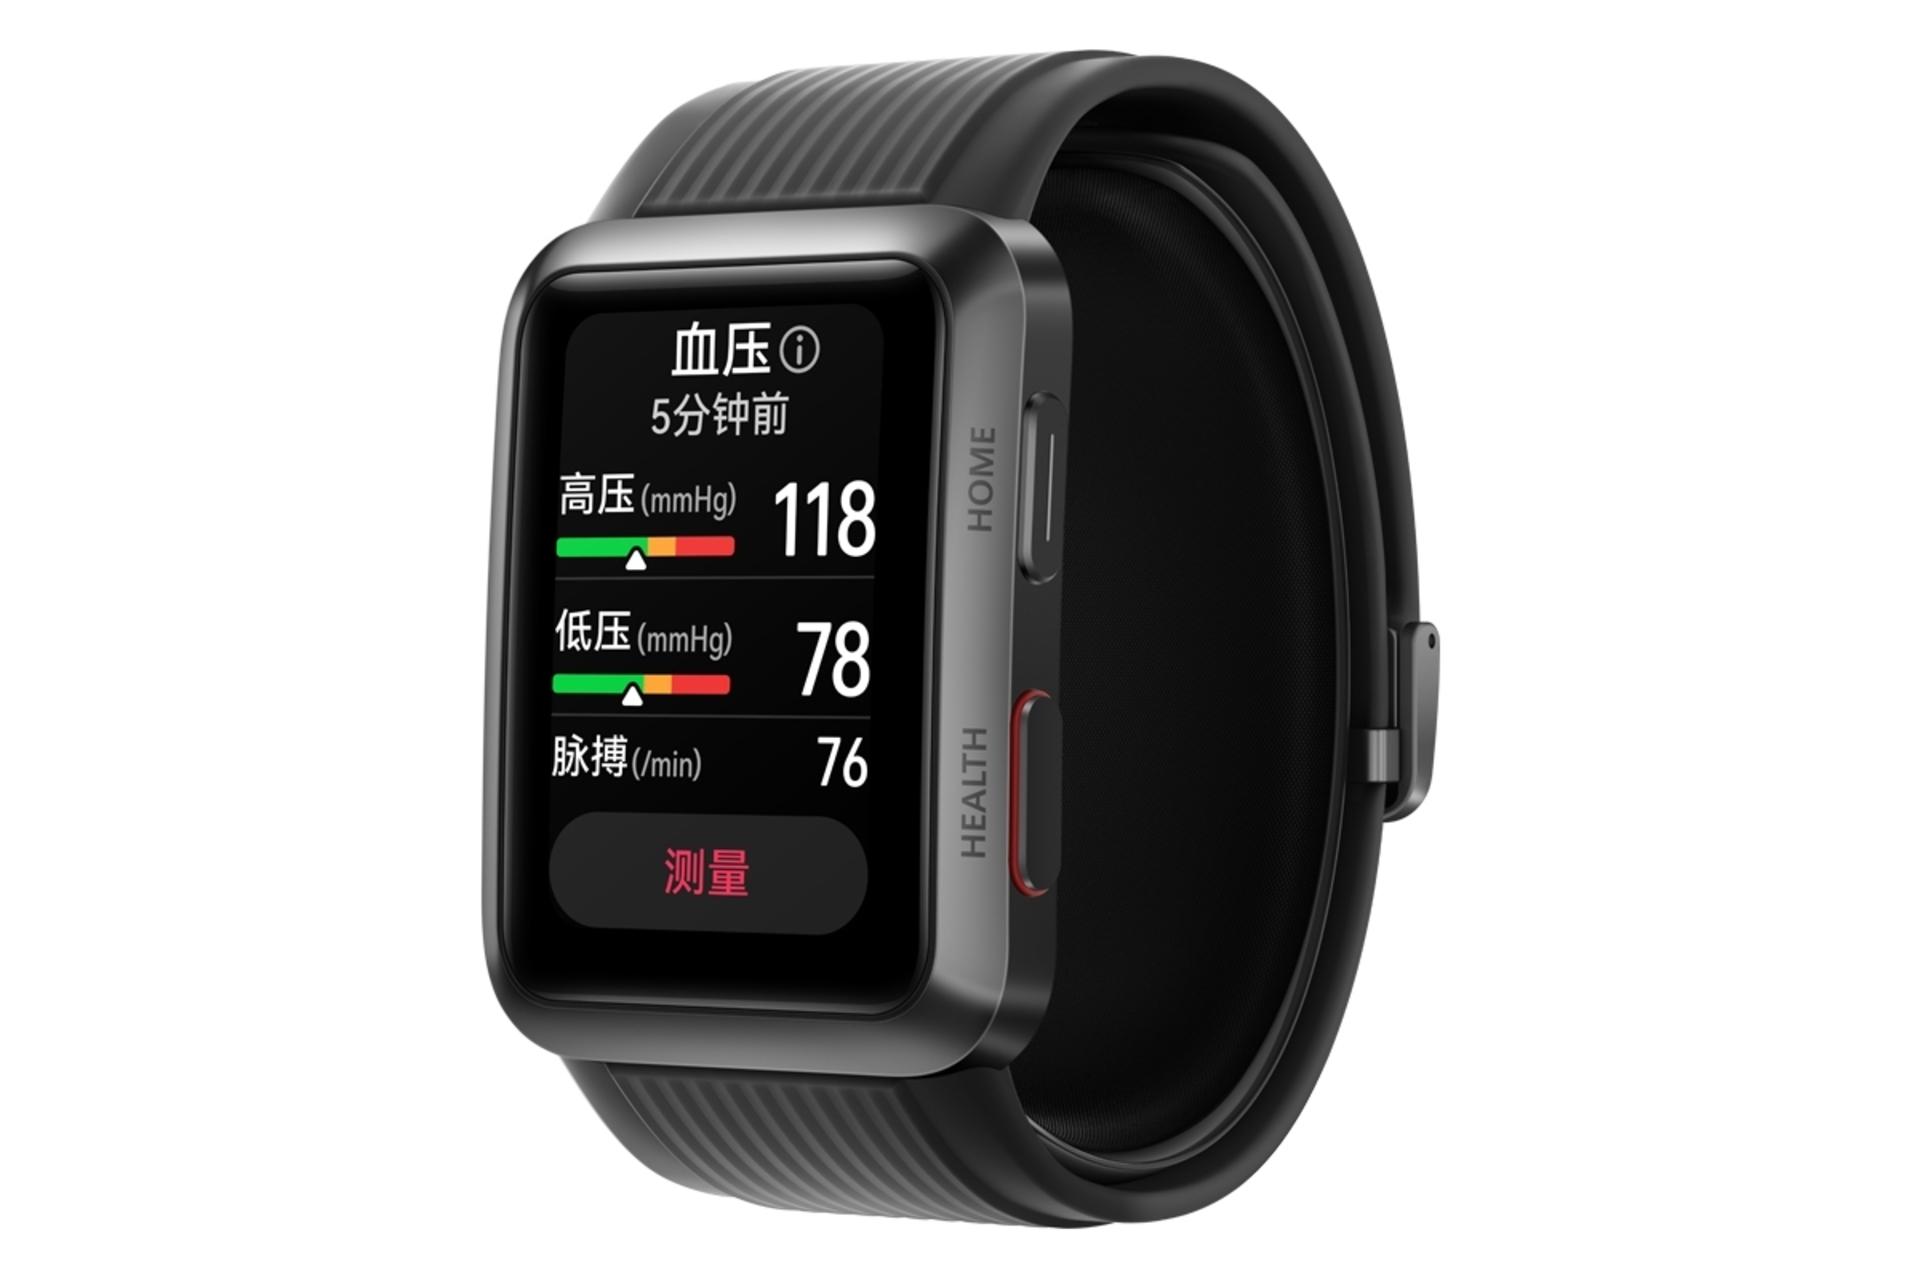 نمای راست هواوی واچ دی / Huawei Watch D مشکی